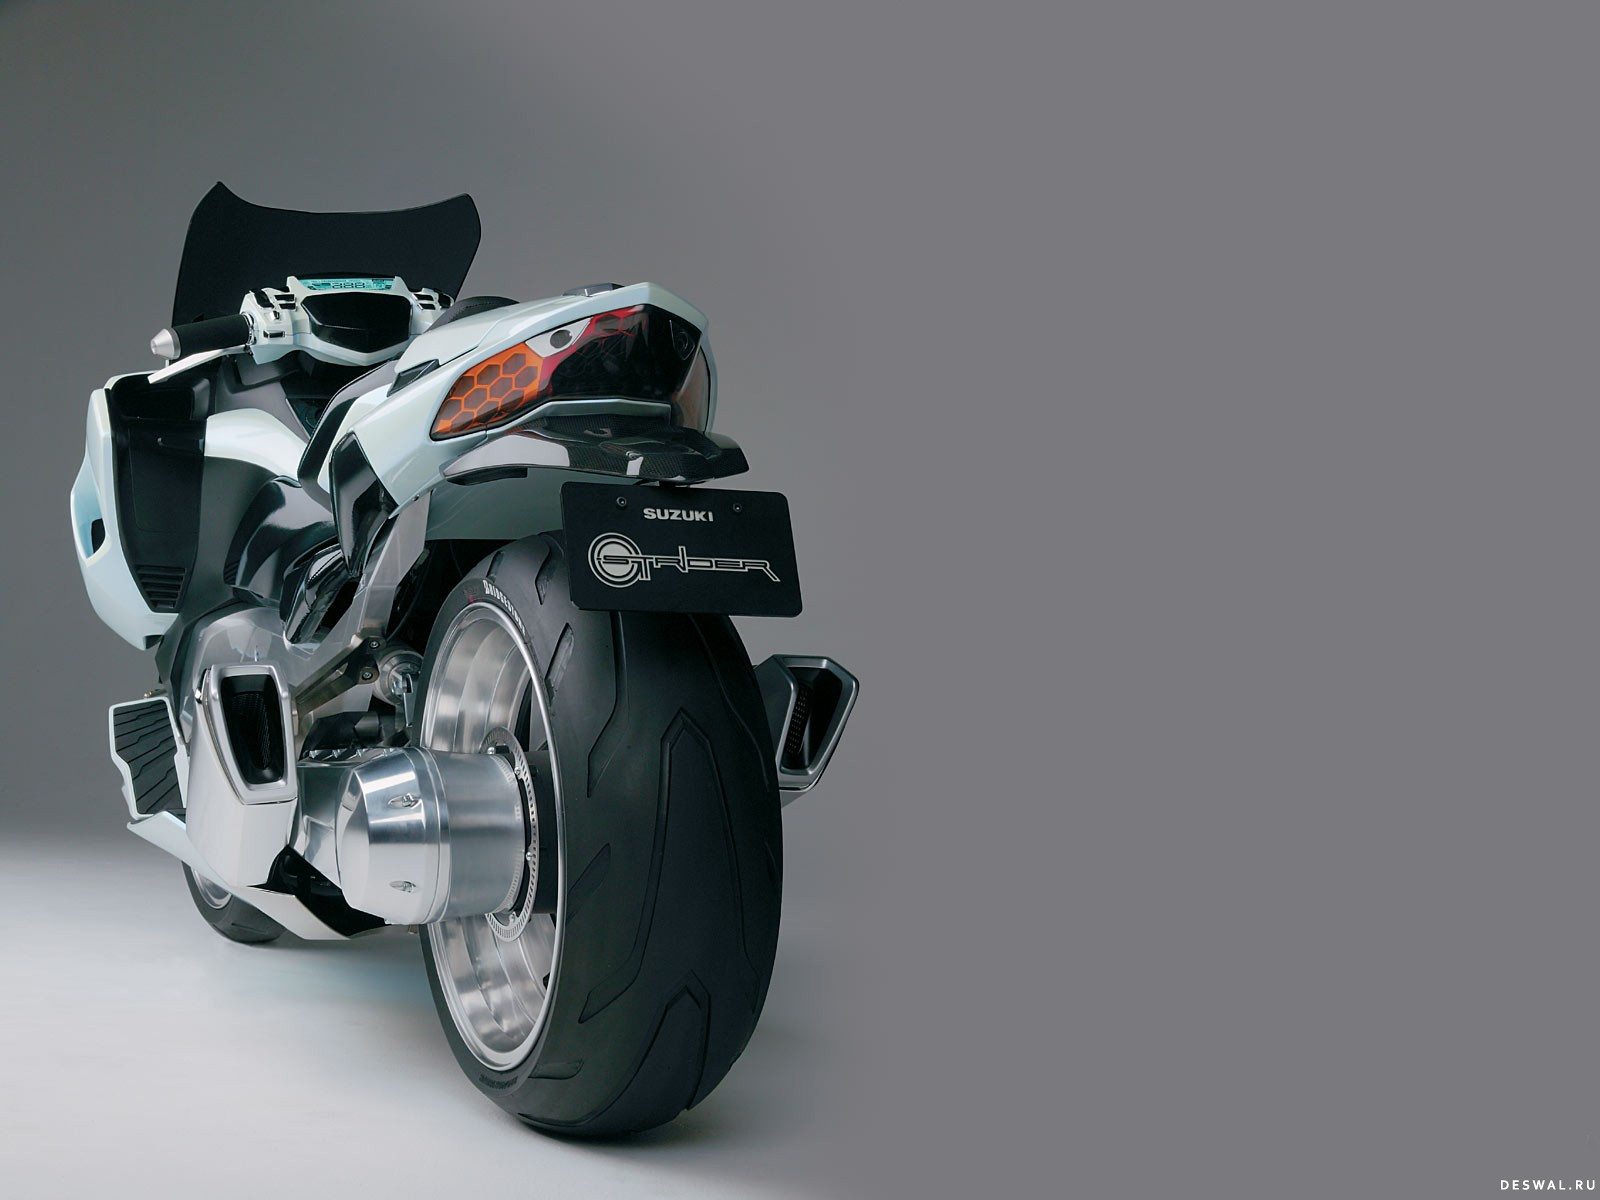 G bike. Suzuki g-Strider. Концепт мотоцикла Suzuki. Велосипеды которые похожи на мотоцикл. Классные штуки на мотоцикл.